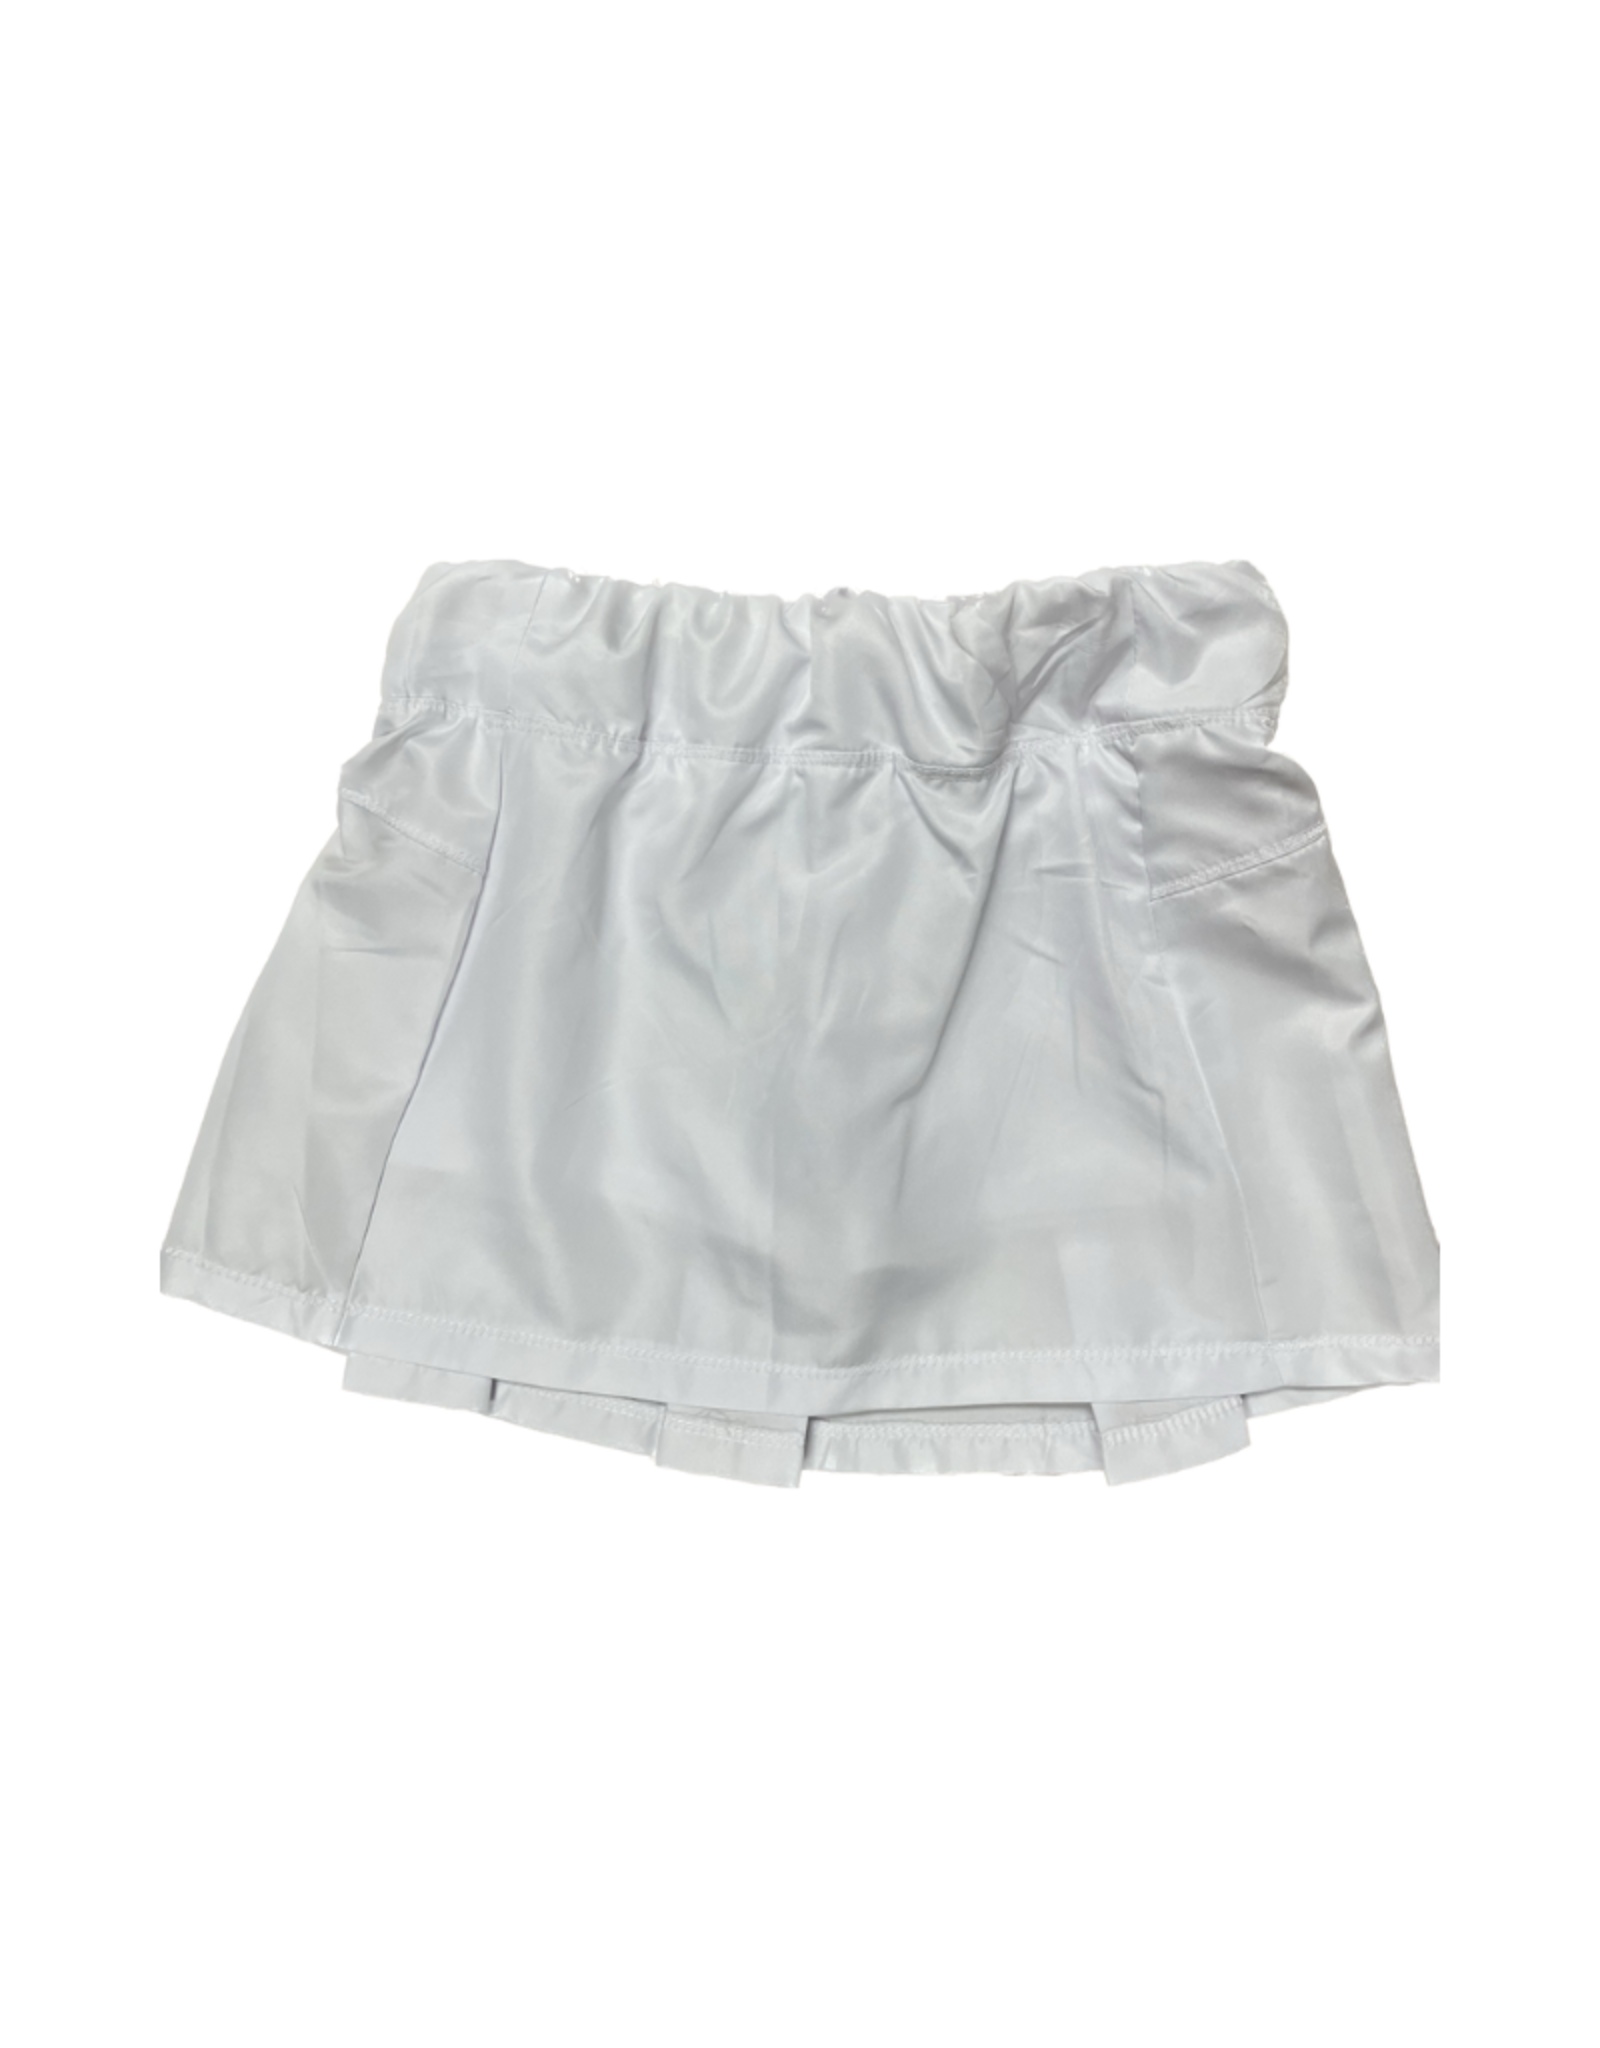 Country Club Skirt White XL (14/16)